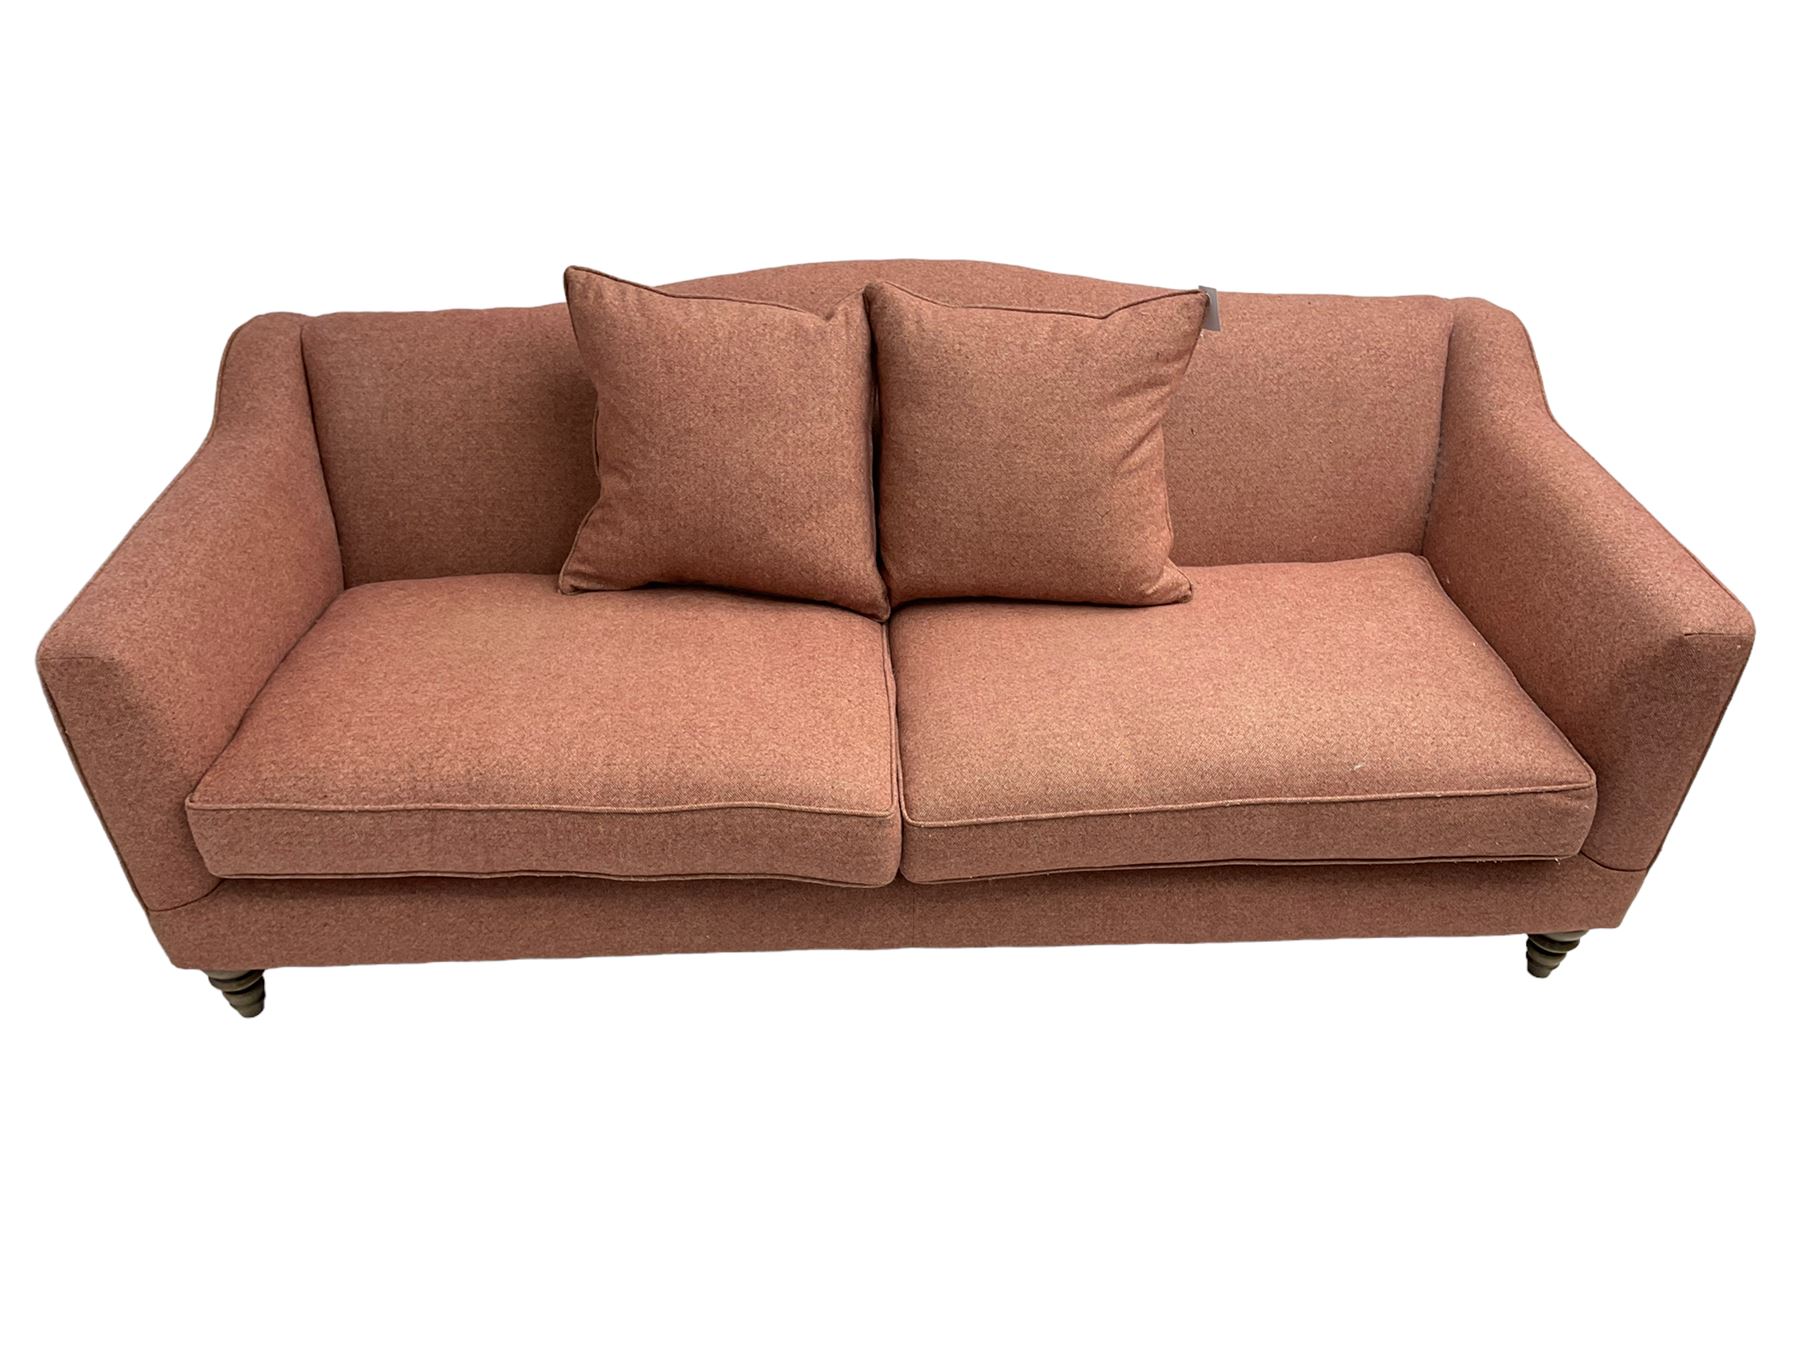 John Lewis - Grande four seat sofa upholstered in woollen tweed fabric - Image 2 of 5